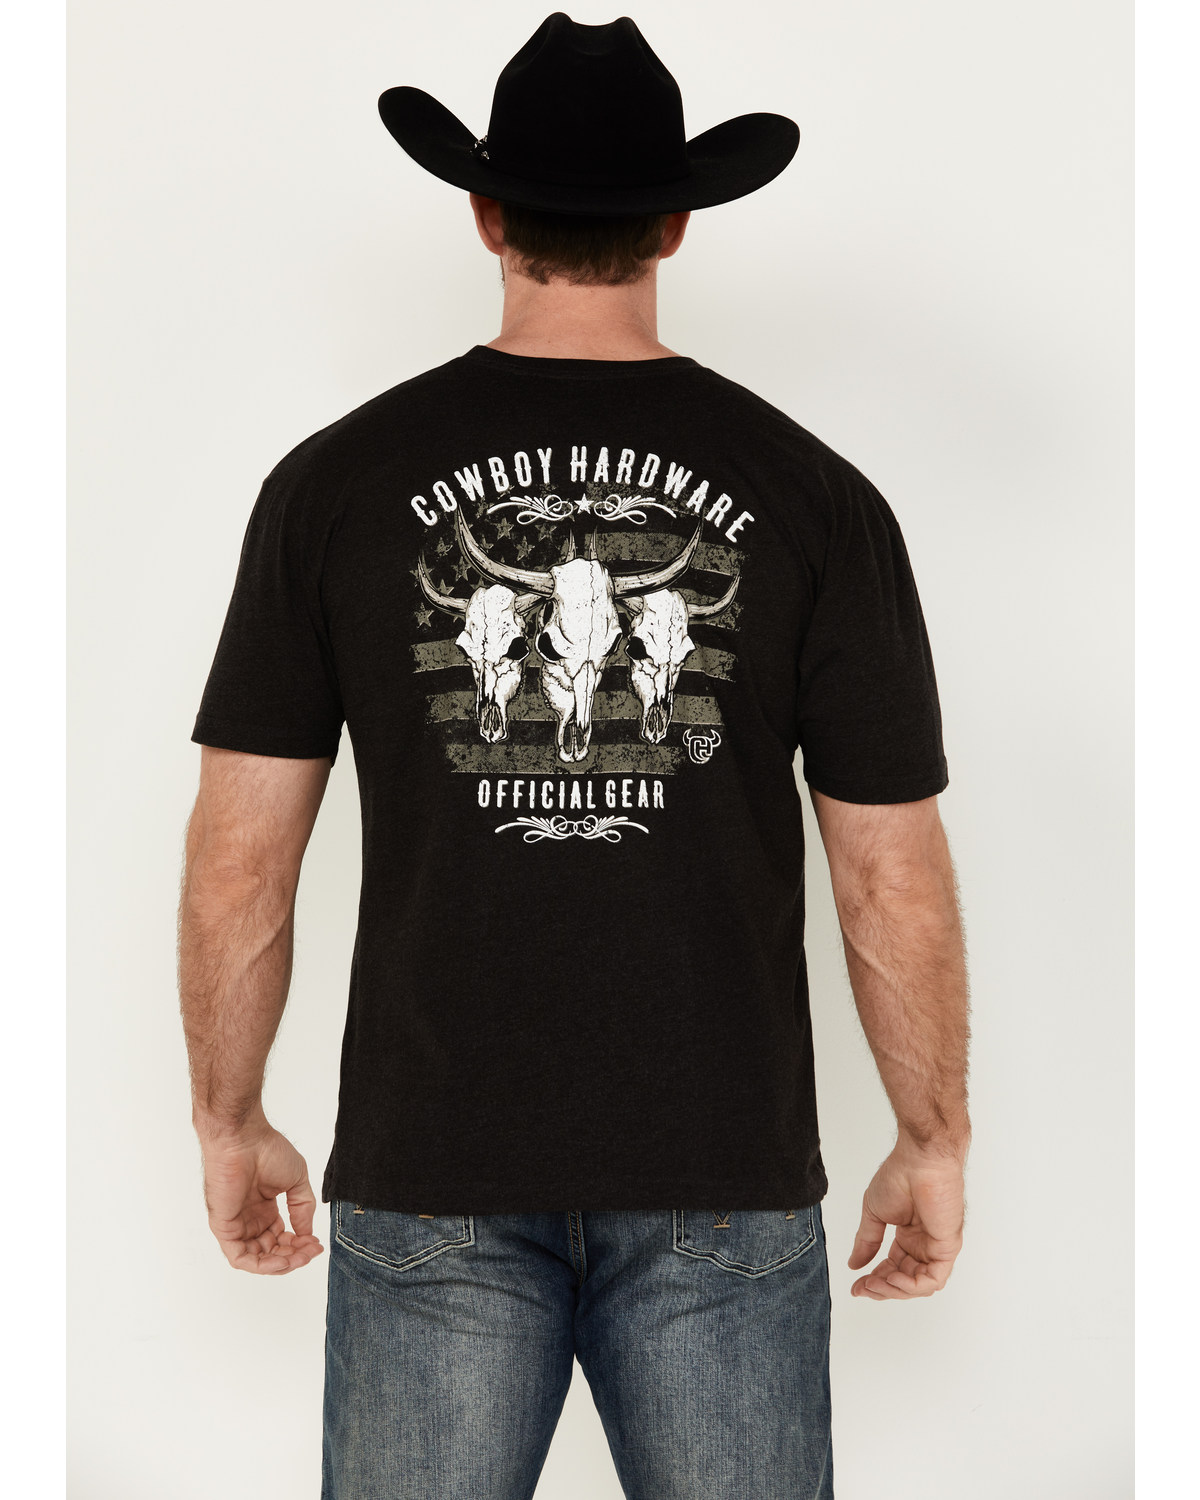 Cowboy Hardware Men's Triple Skull Short Sleeve Graphic T-Shirt